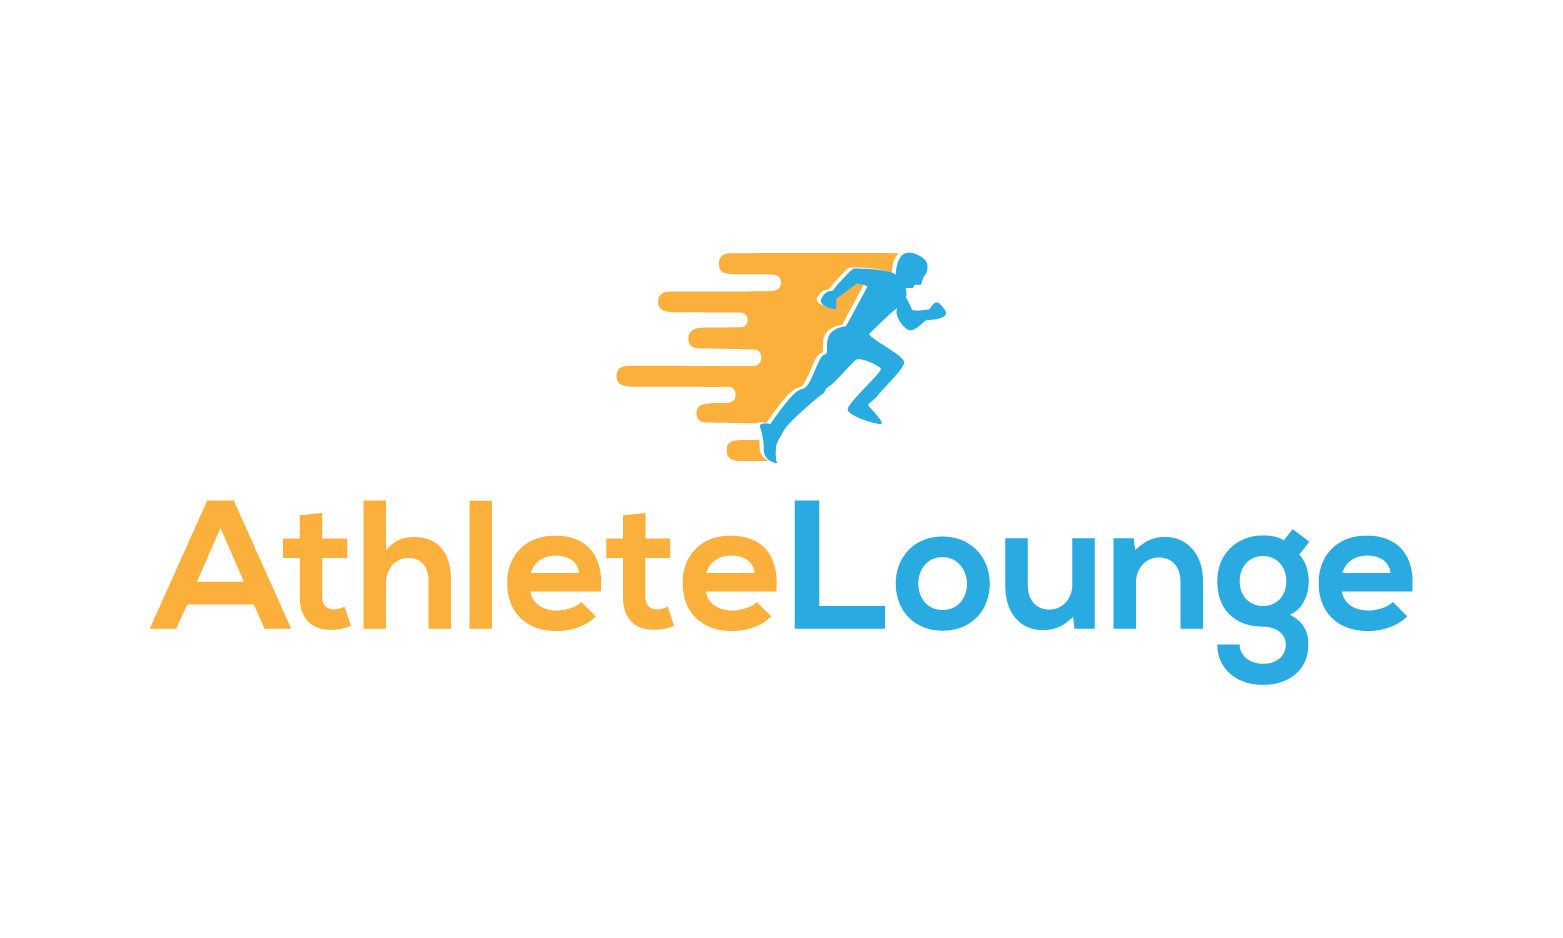 AthleteLounge.com - Creative brandable domain for sale